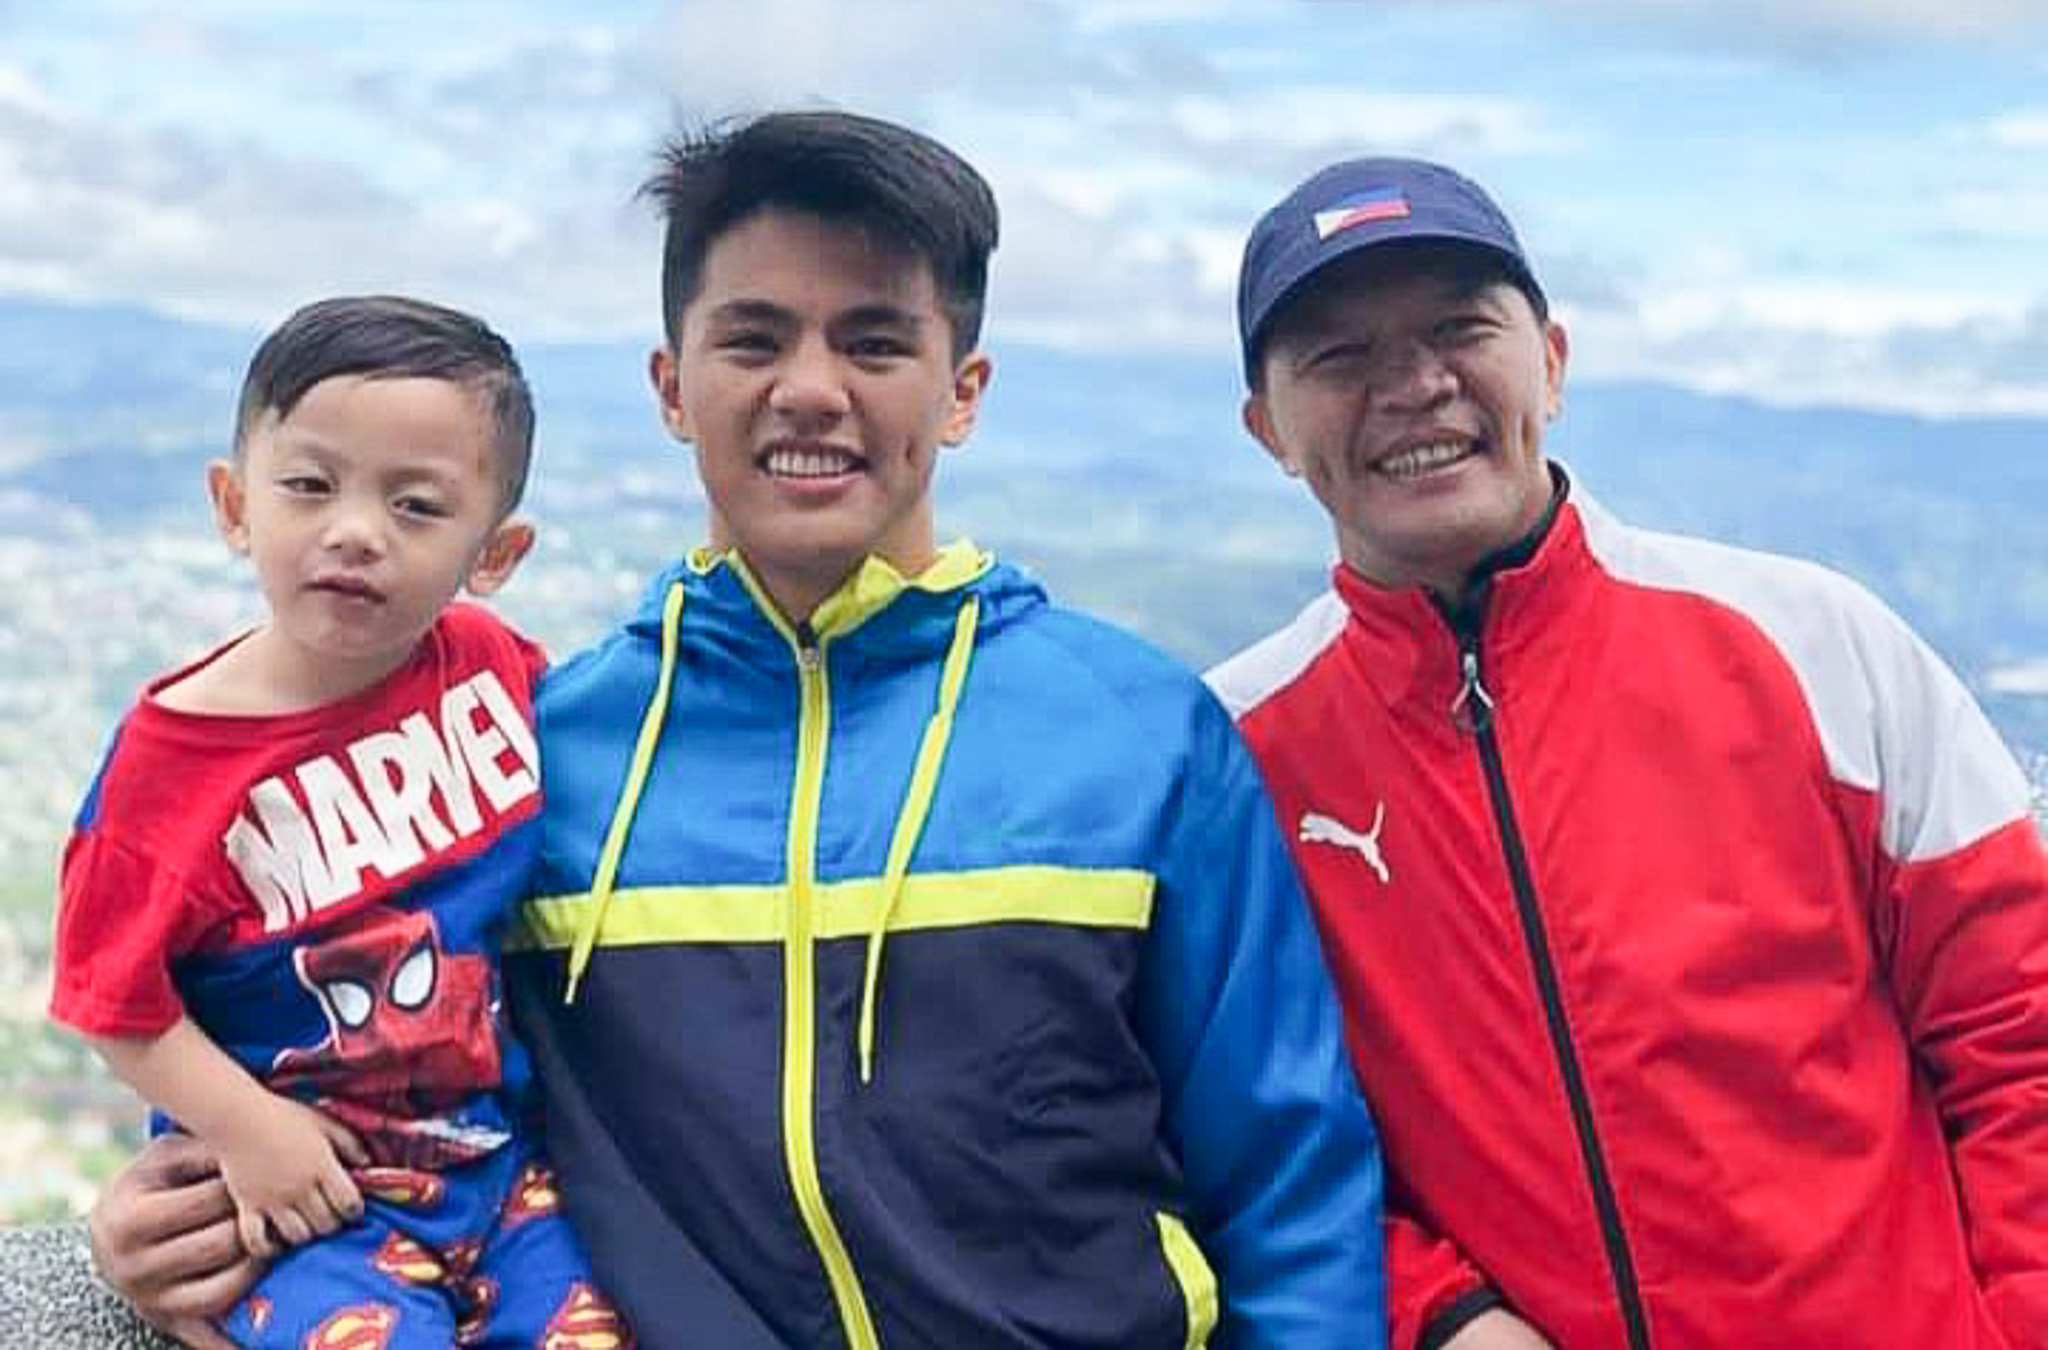 Coach Mark Sangiao has high hopes for his son Jhanlo